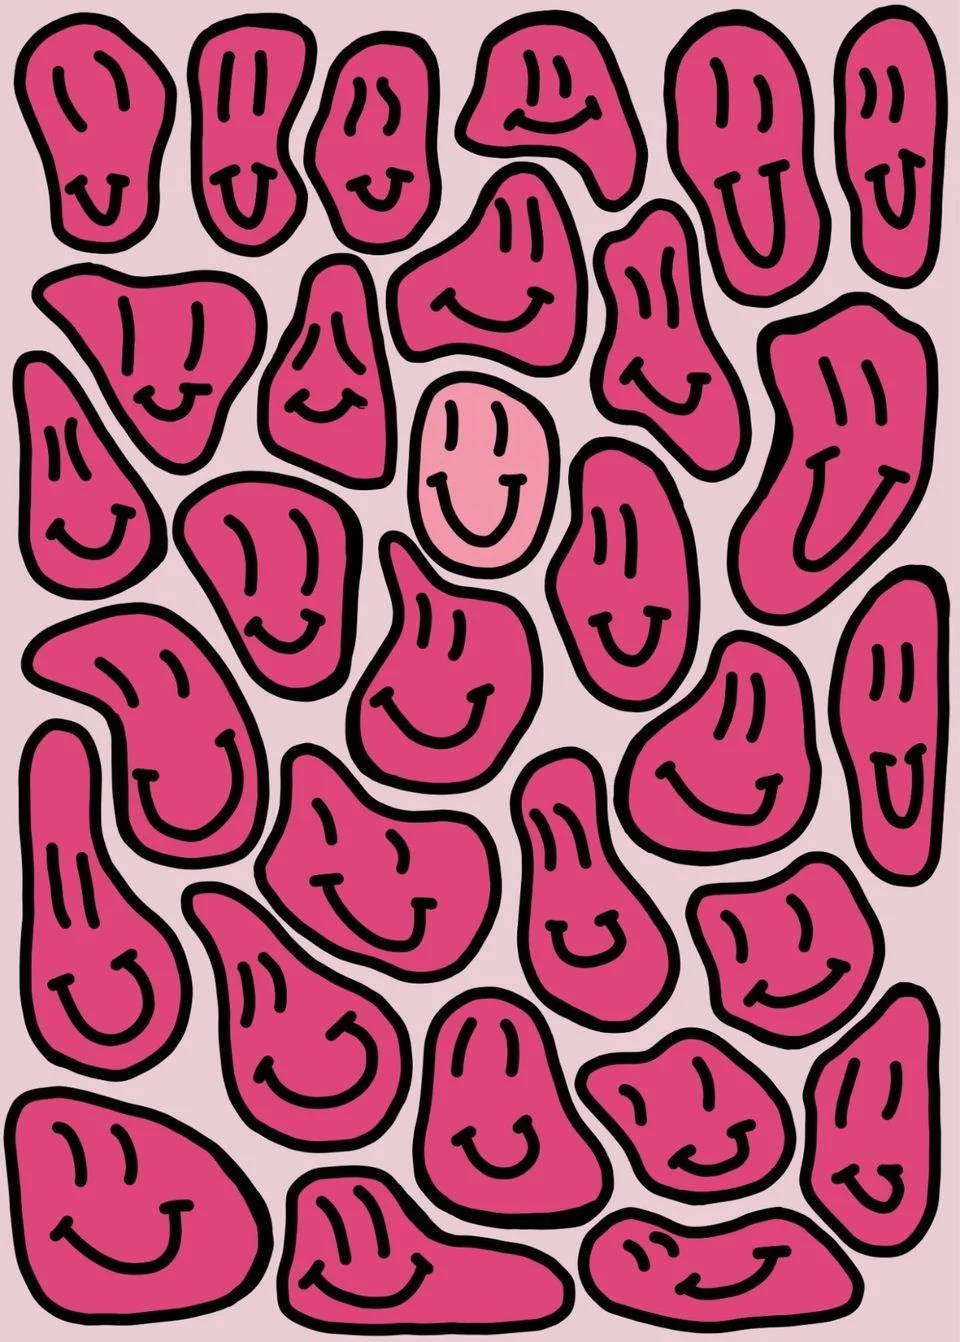 Download Preppy Smiley Face Pink Doodles Wallpaper